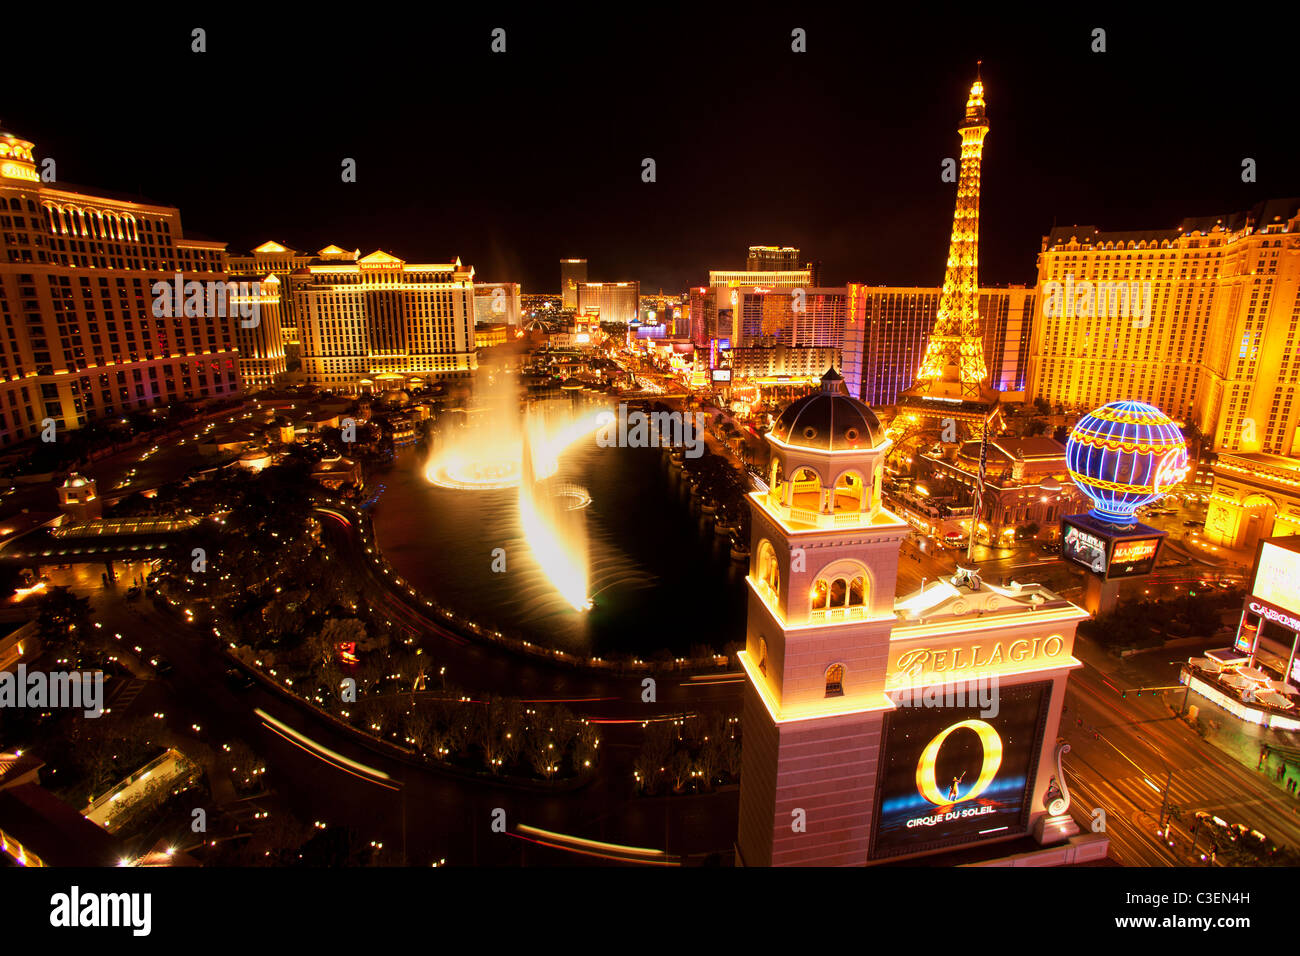 The Bellagio Fountain, Las Vegas, Nevada. Stock Photo